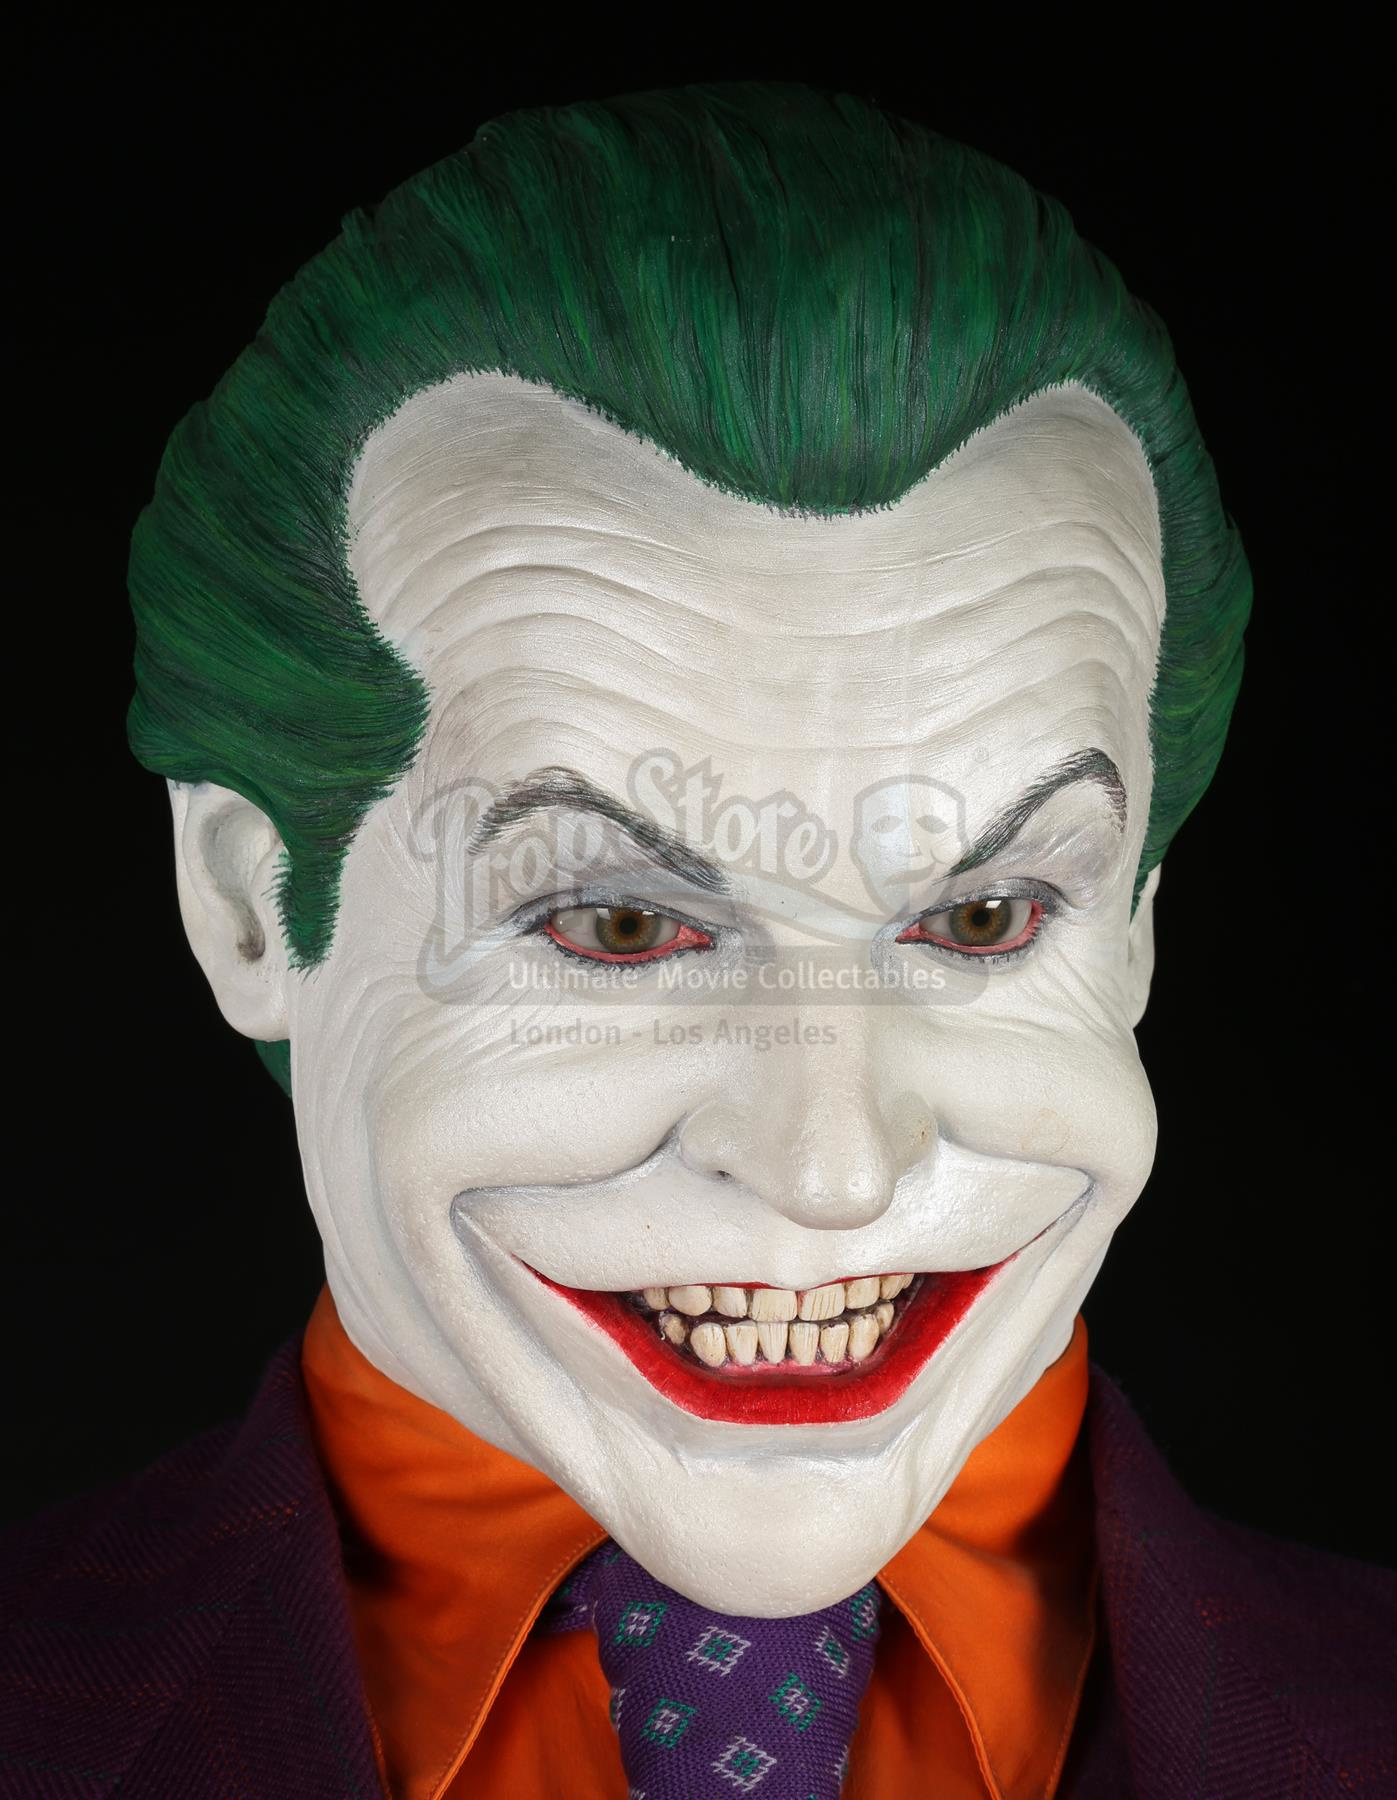 Screen-used Joker costume (Jack Napier suit - 1989)